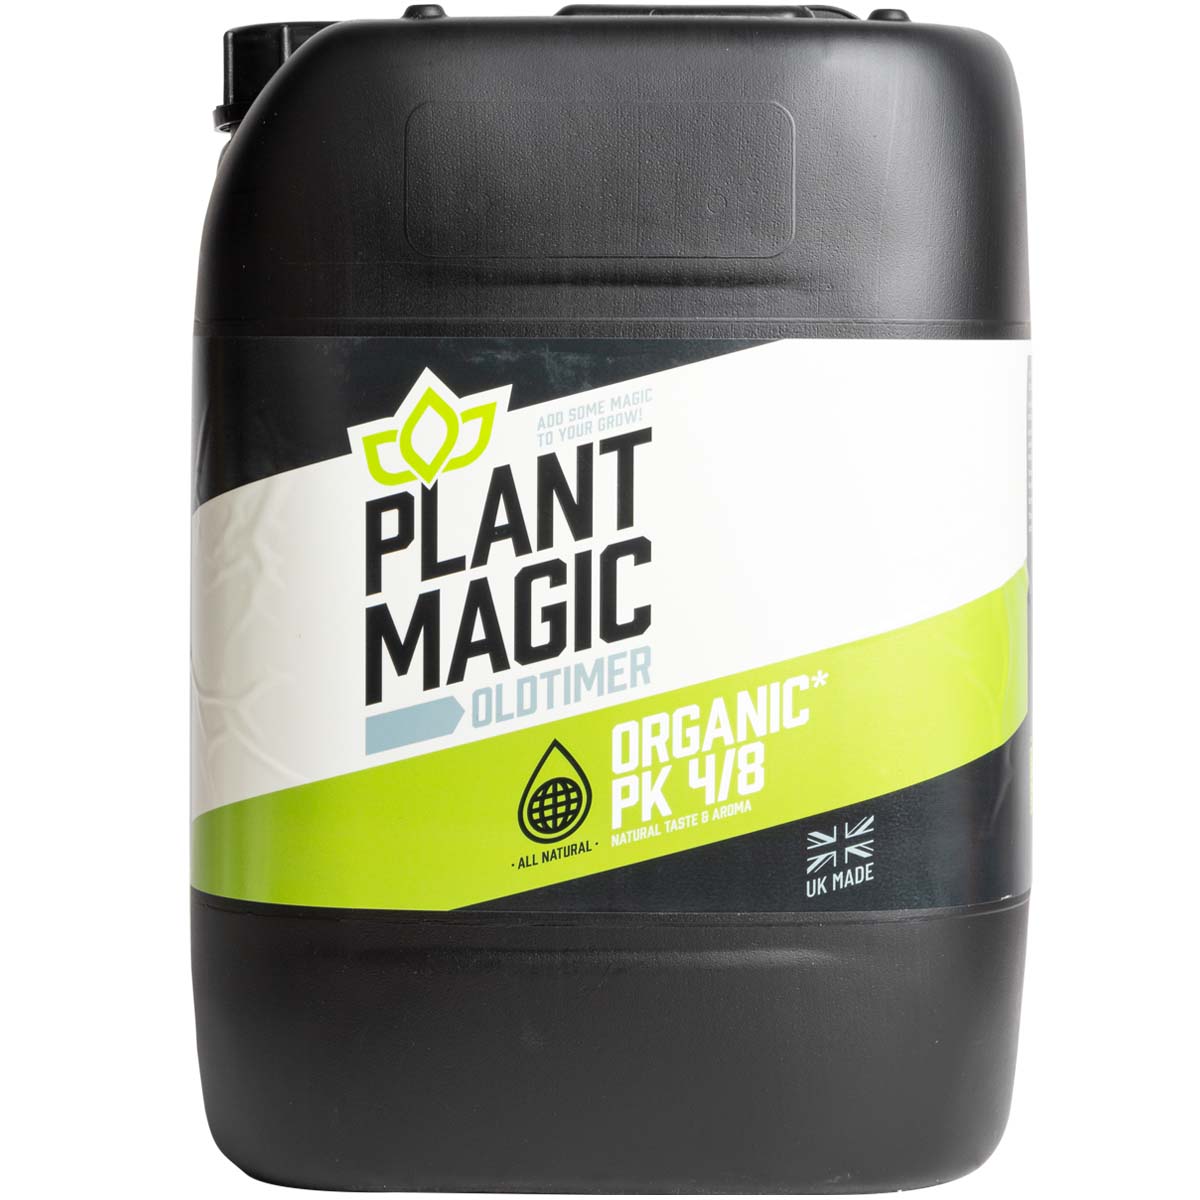 Plant Magic - Oldtimer Organic PK 4-8